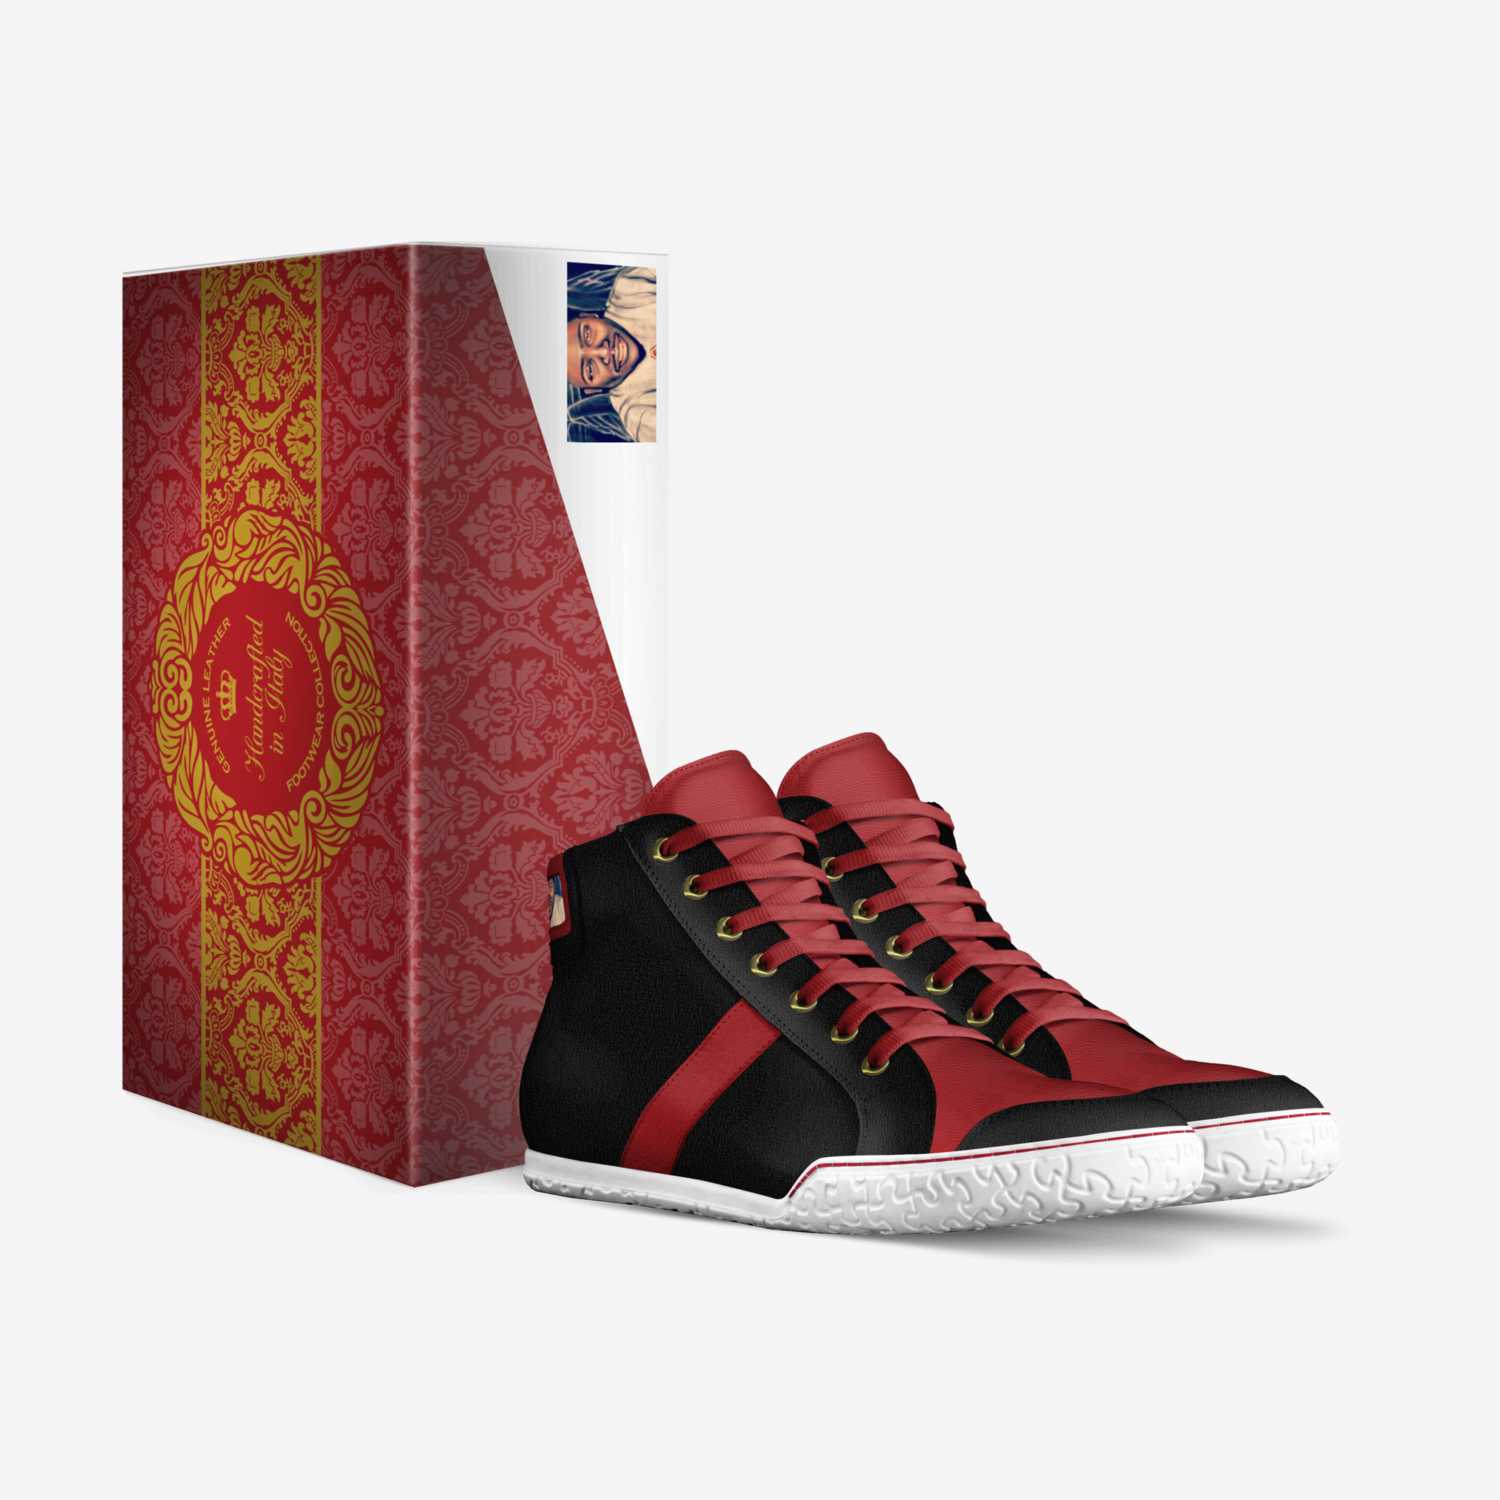 "E" custom made in Italy shoes by Galatikz Dixon | Box view